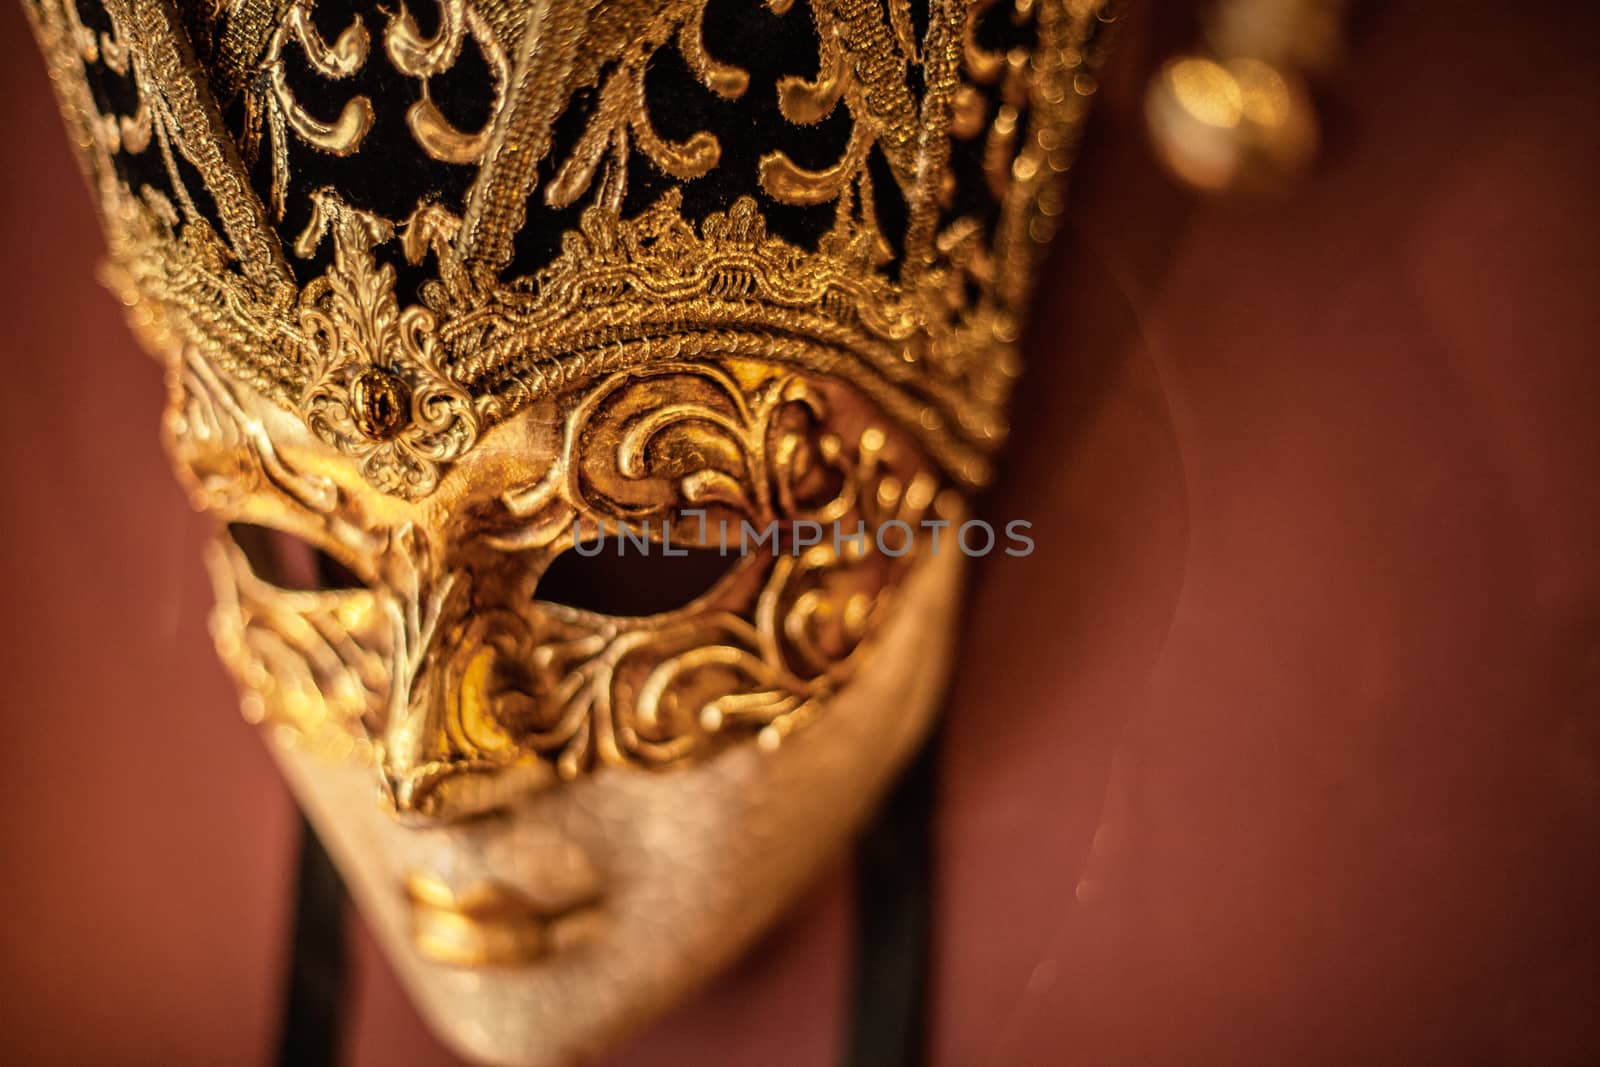 Venice Mask by pencap